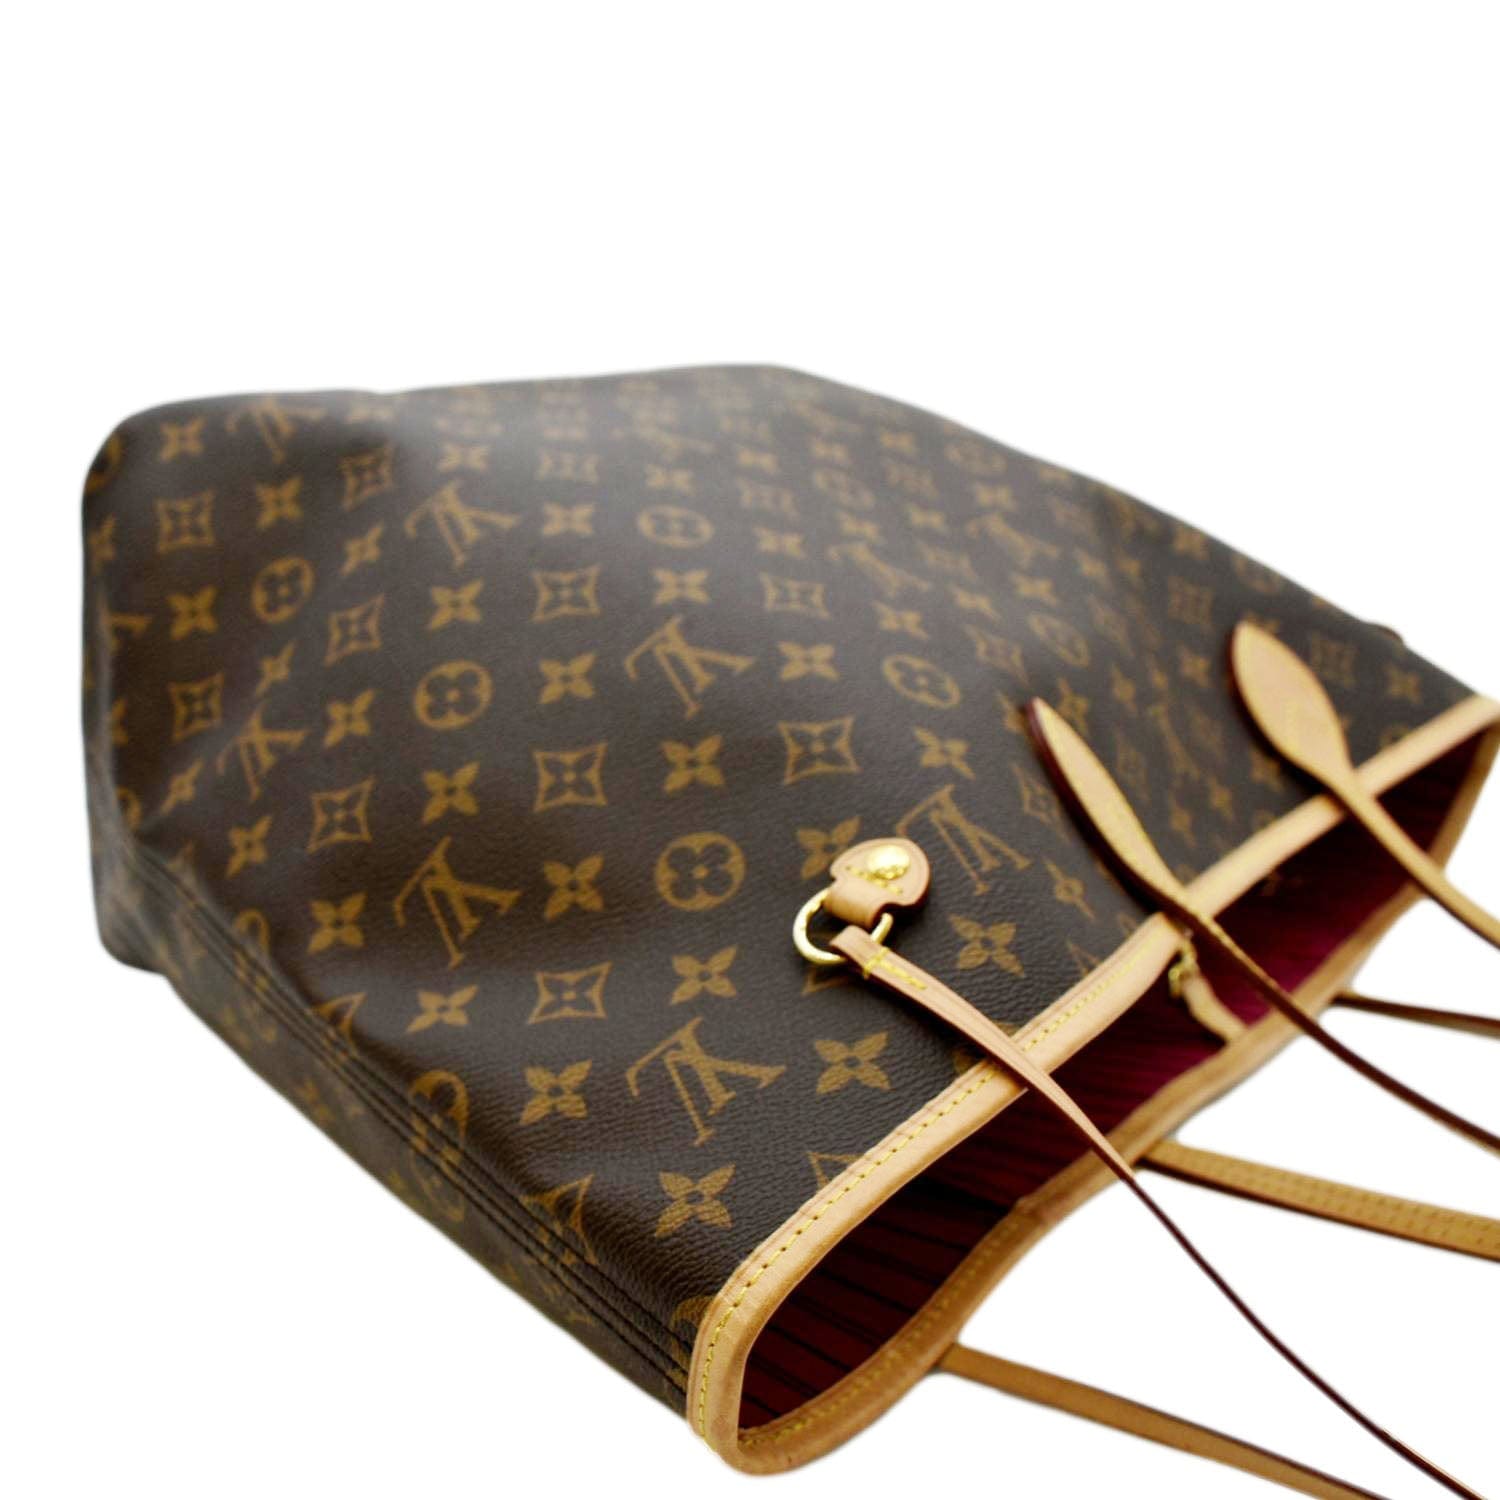 Louis Vuitton Monogram Neverfull GM - Brown Totes, Handbags